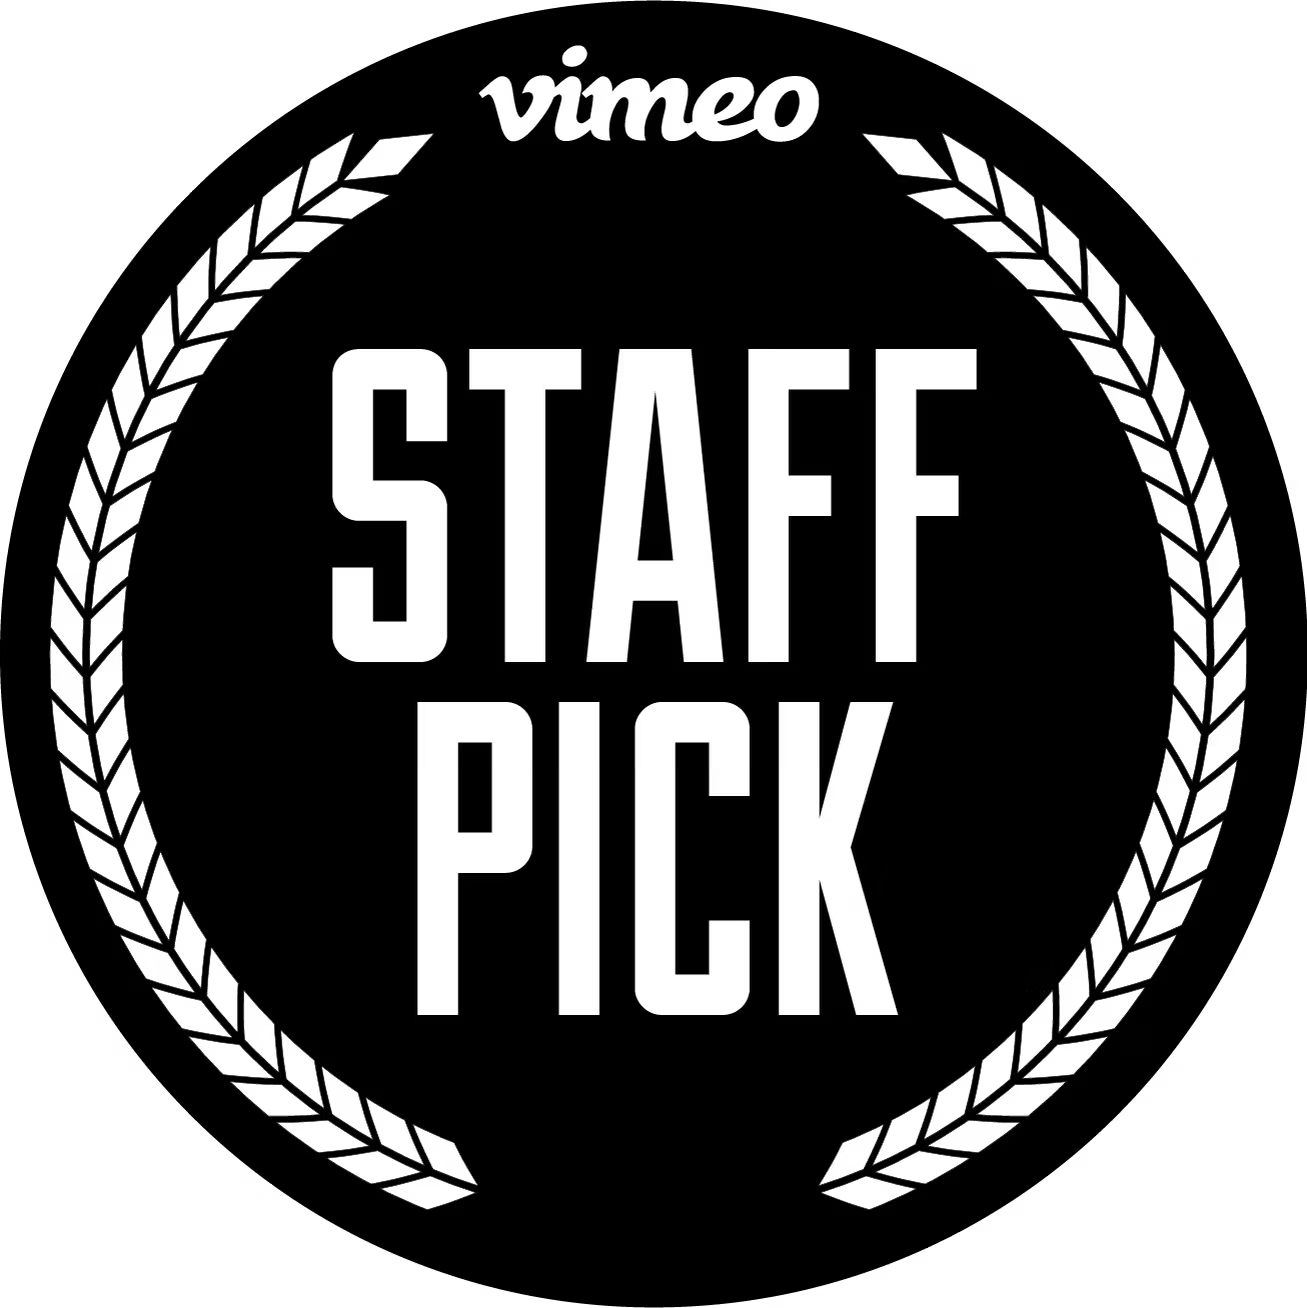 vimeo_staff_pick.png